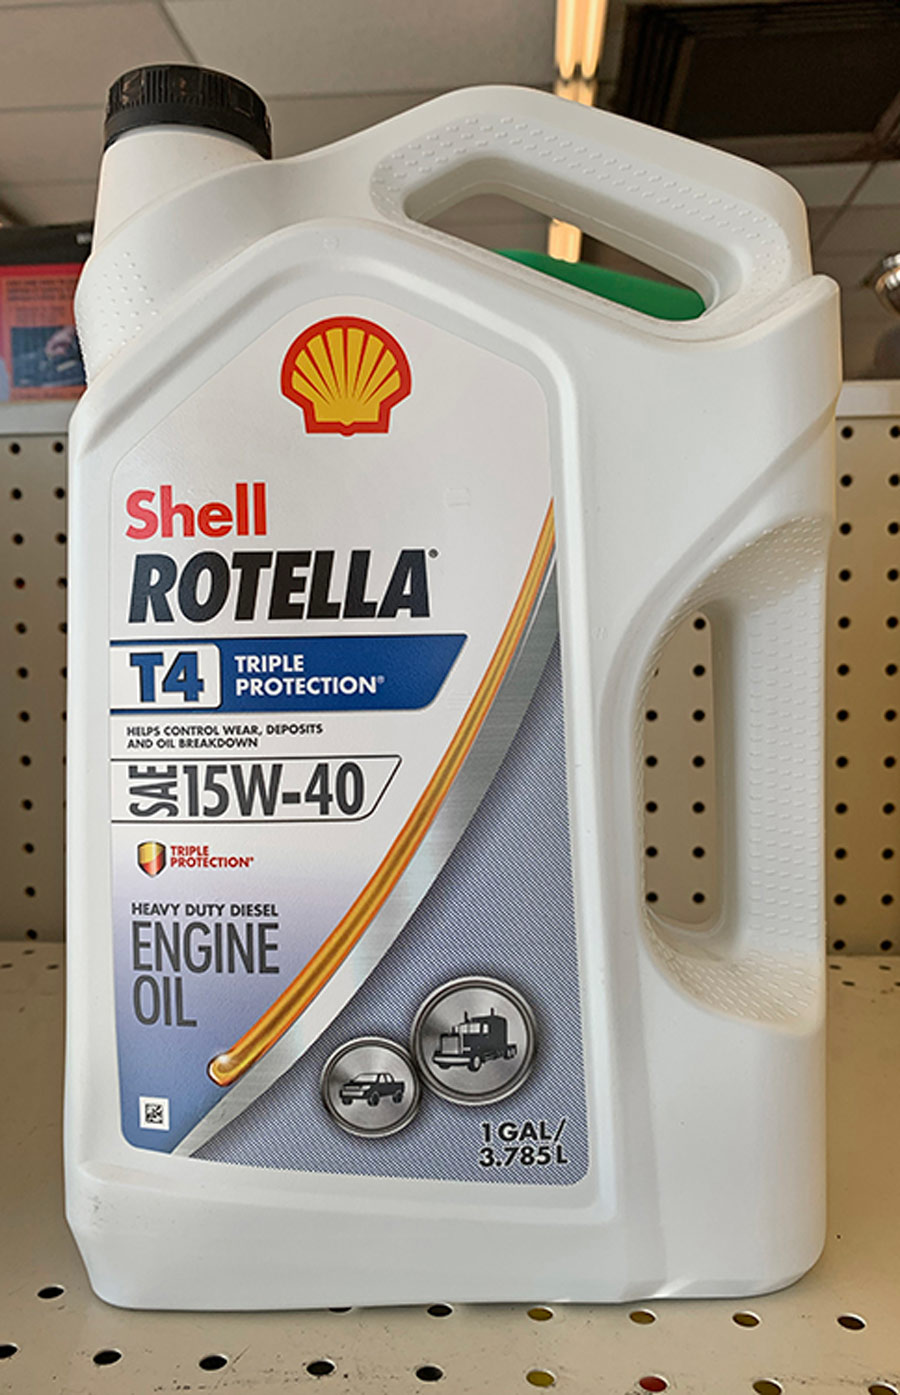 Bottle of Shell’s popular Rotella brand